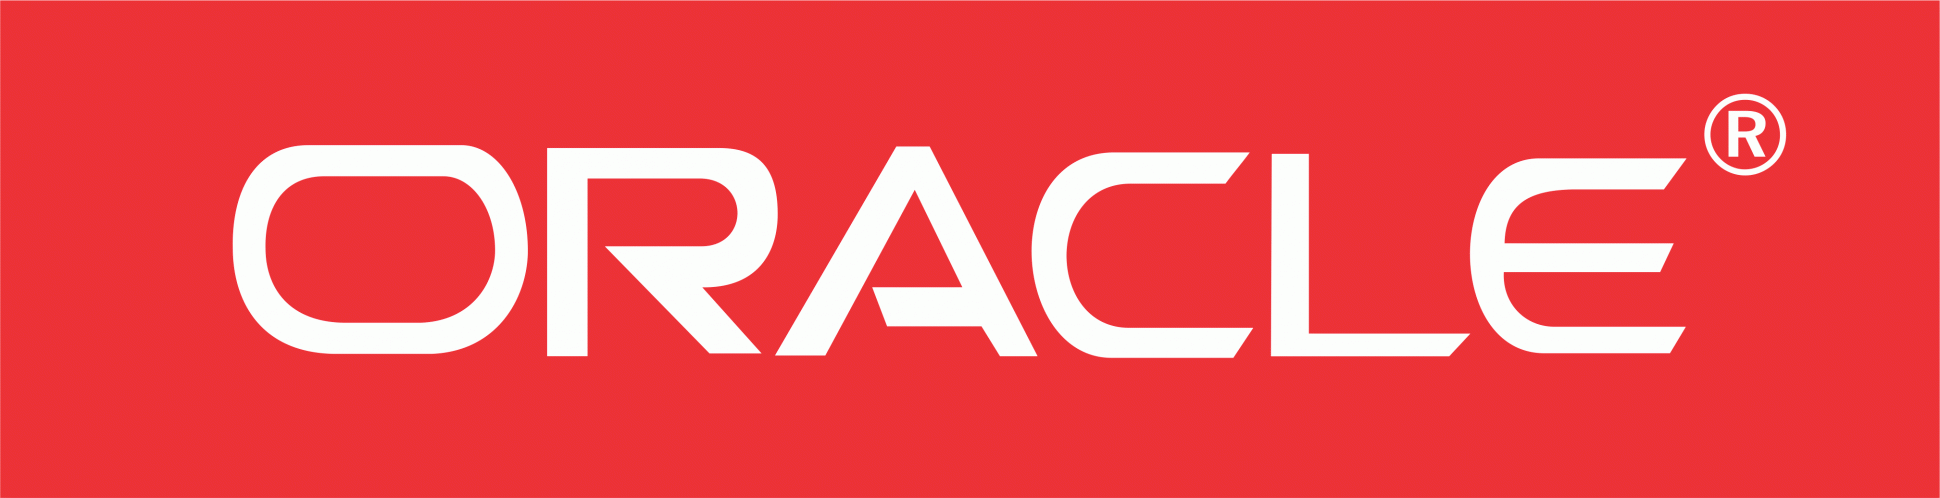 oracle-logo-1940x498